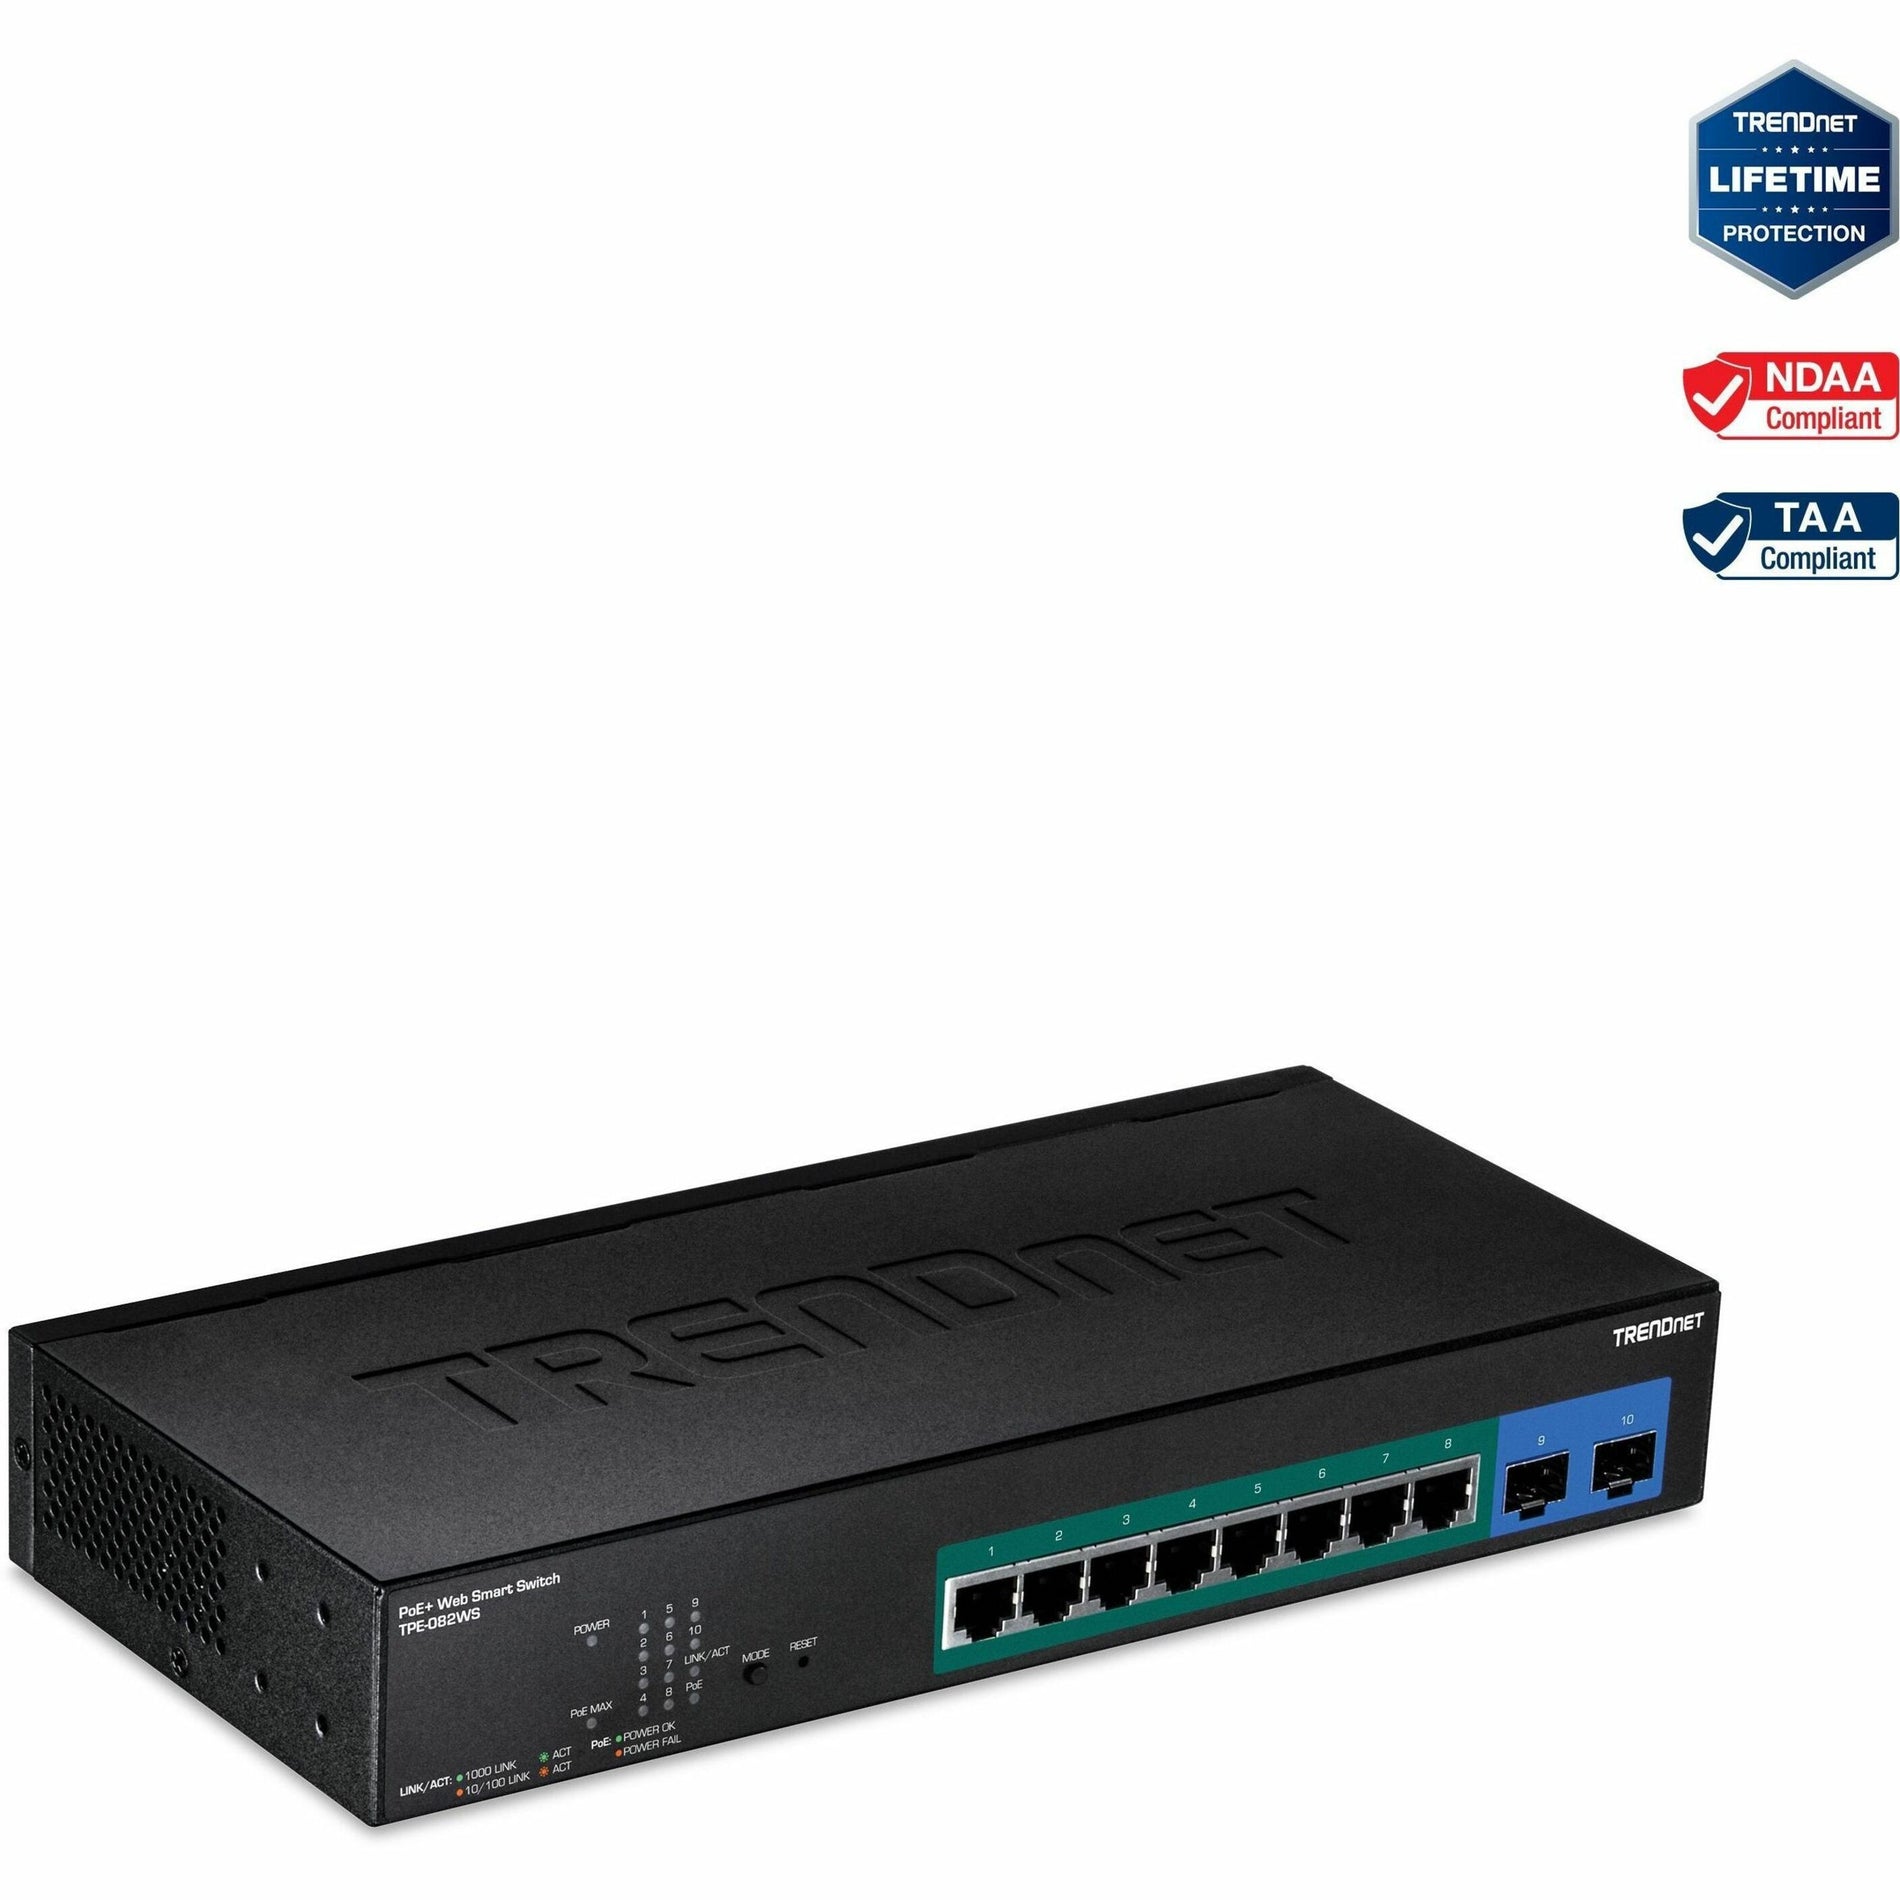 TRENDnet TPE-082WS 10-Port Gigabit Web Smart PoE+ Switch, 8 x Gigabit PoE+ Ports, 2 x SFP Slots, VLAN, QoS, IPv6 Support